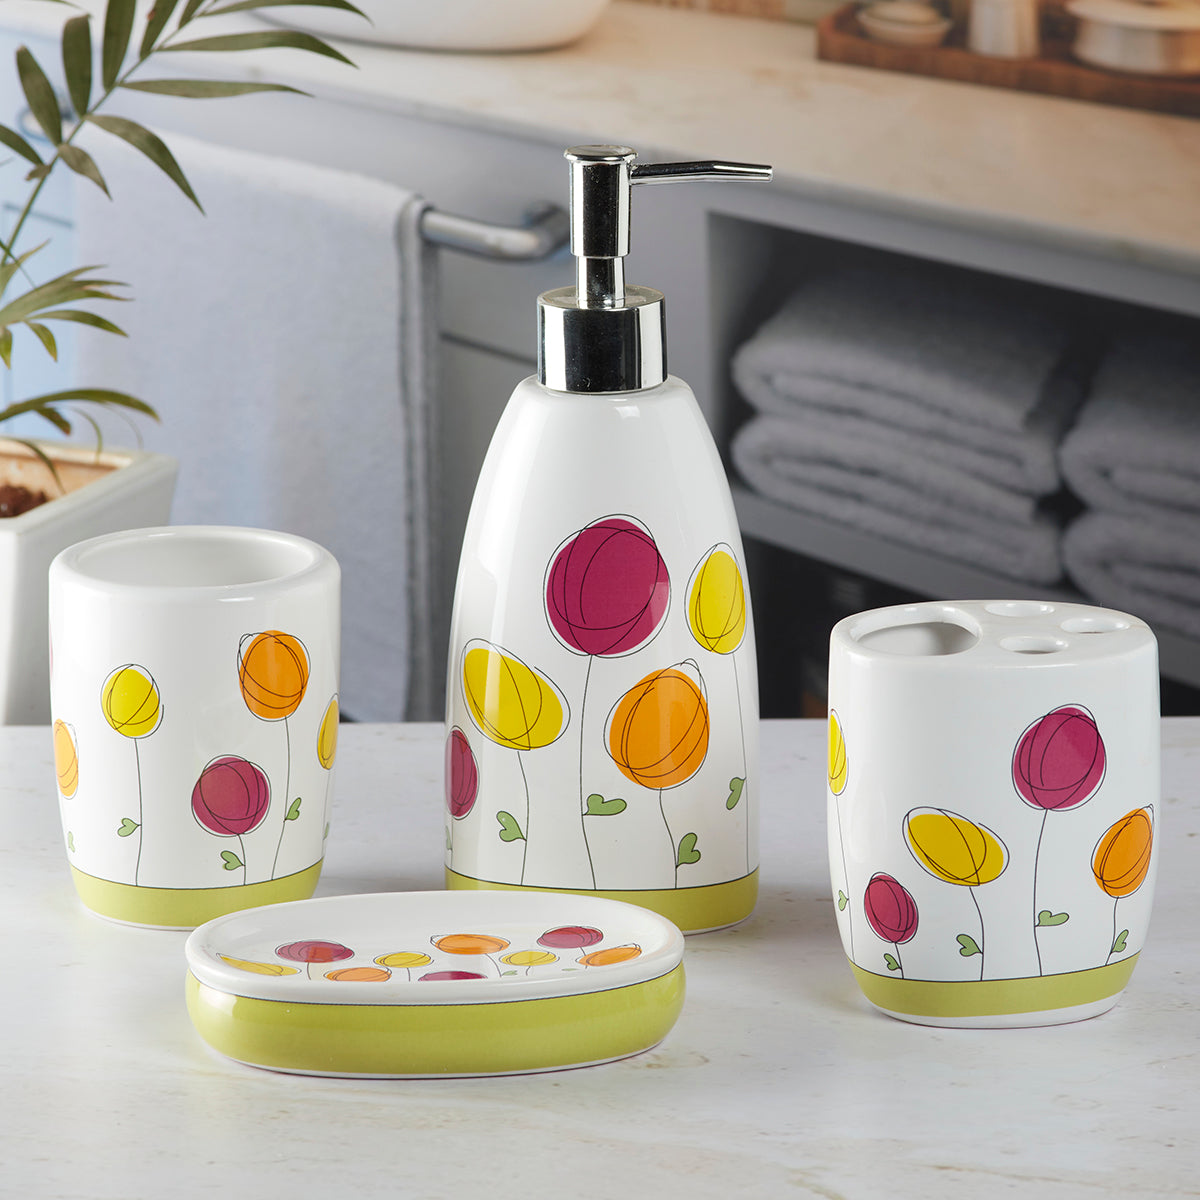 Ceramic Bathroom Accessories Set of 4 Bath Set with Soap Dispenser (9880)